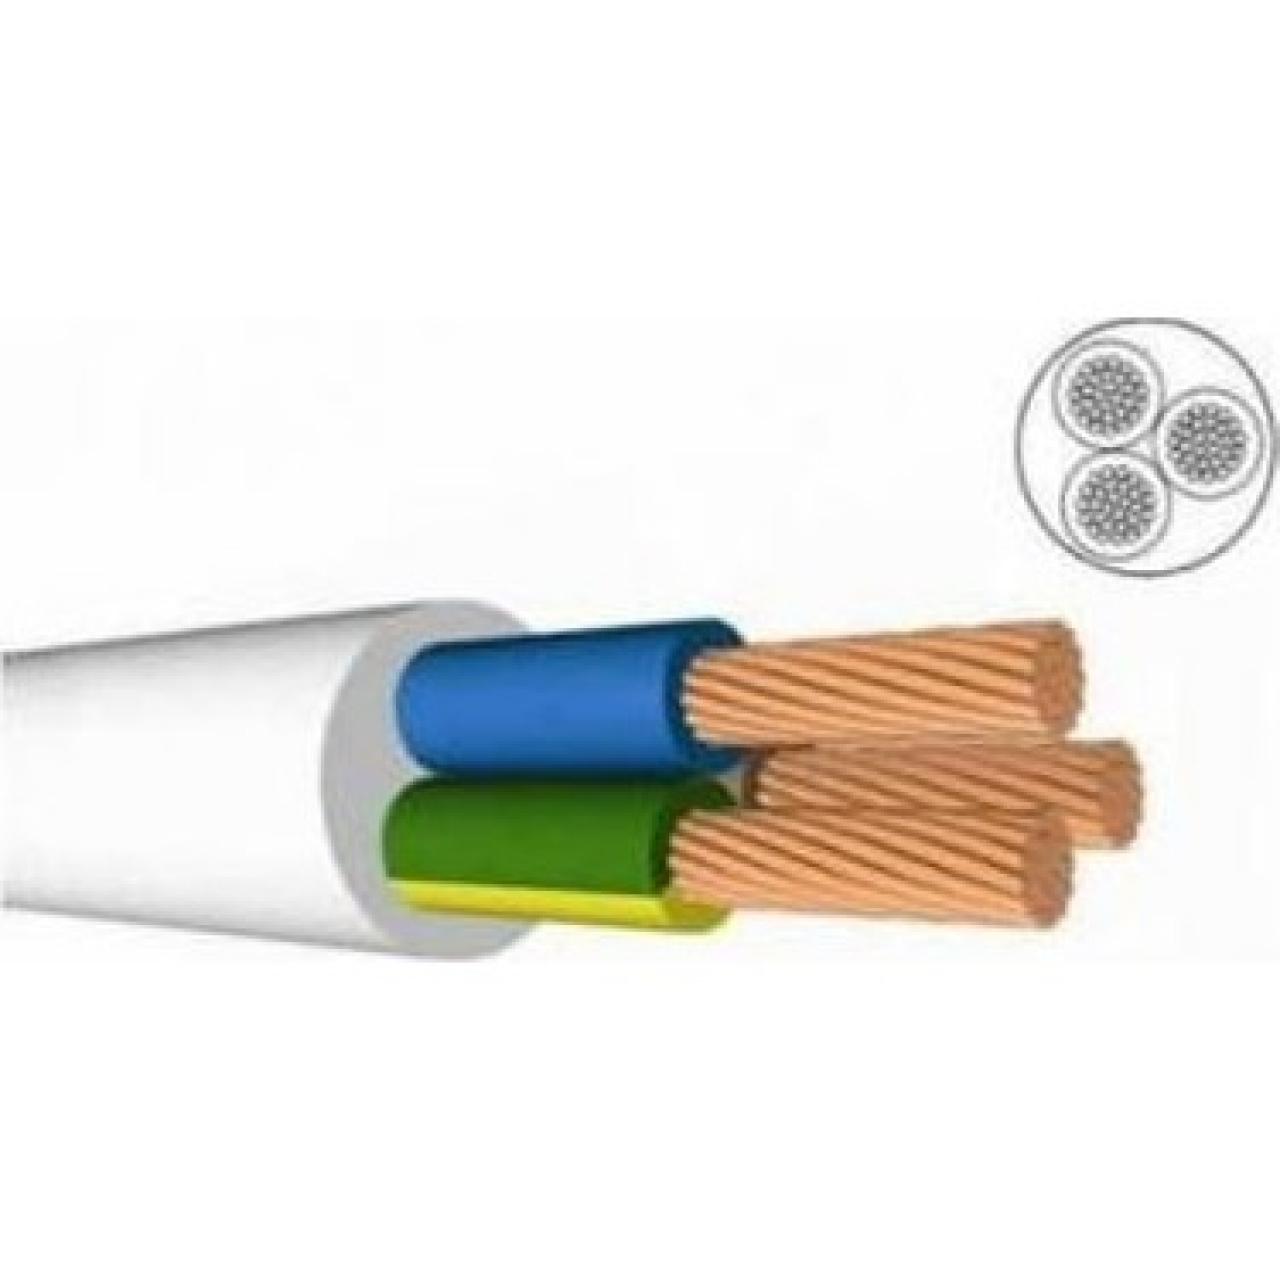 Sartel 3 x 2.5 mm Bakır TTR Kablo 1 Metre 